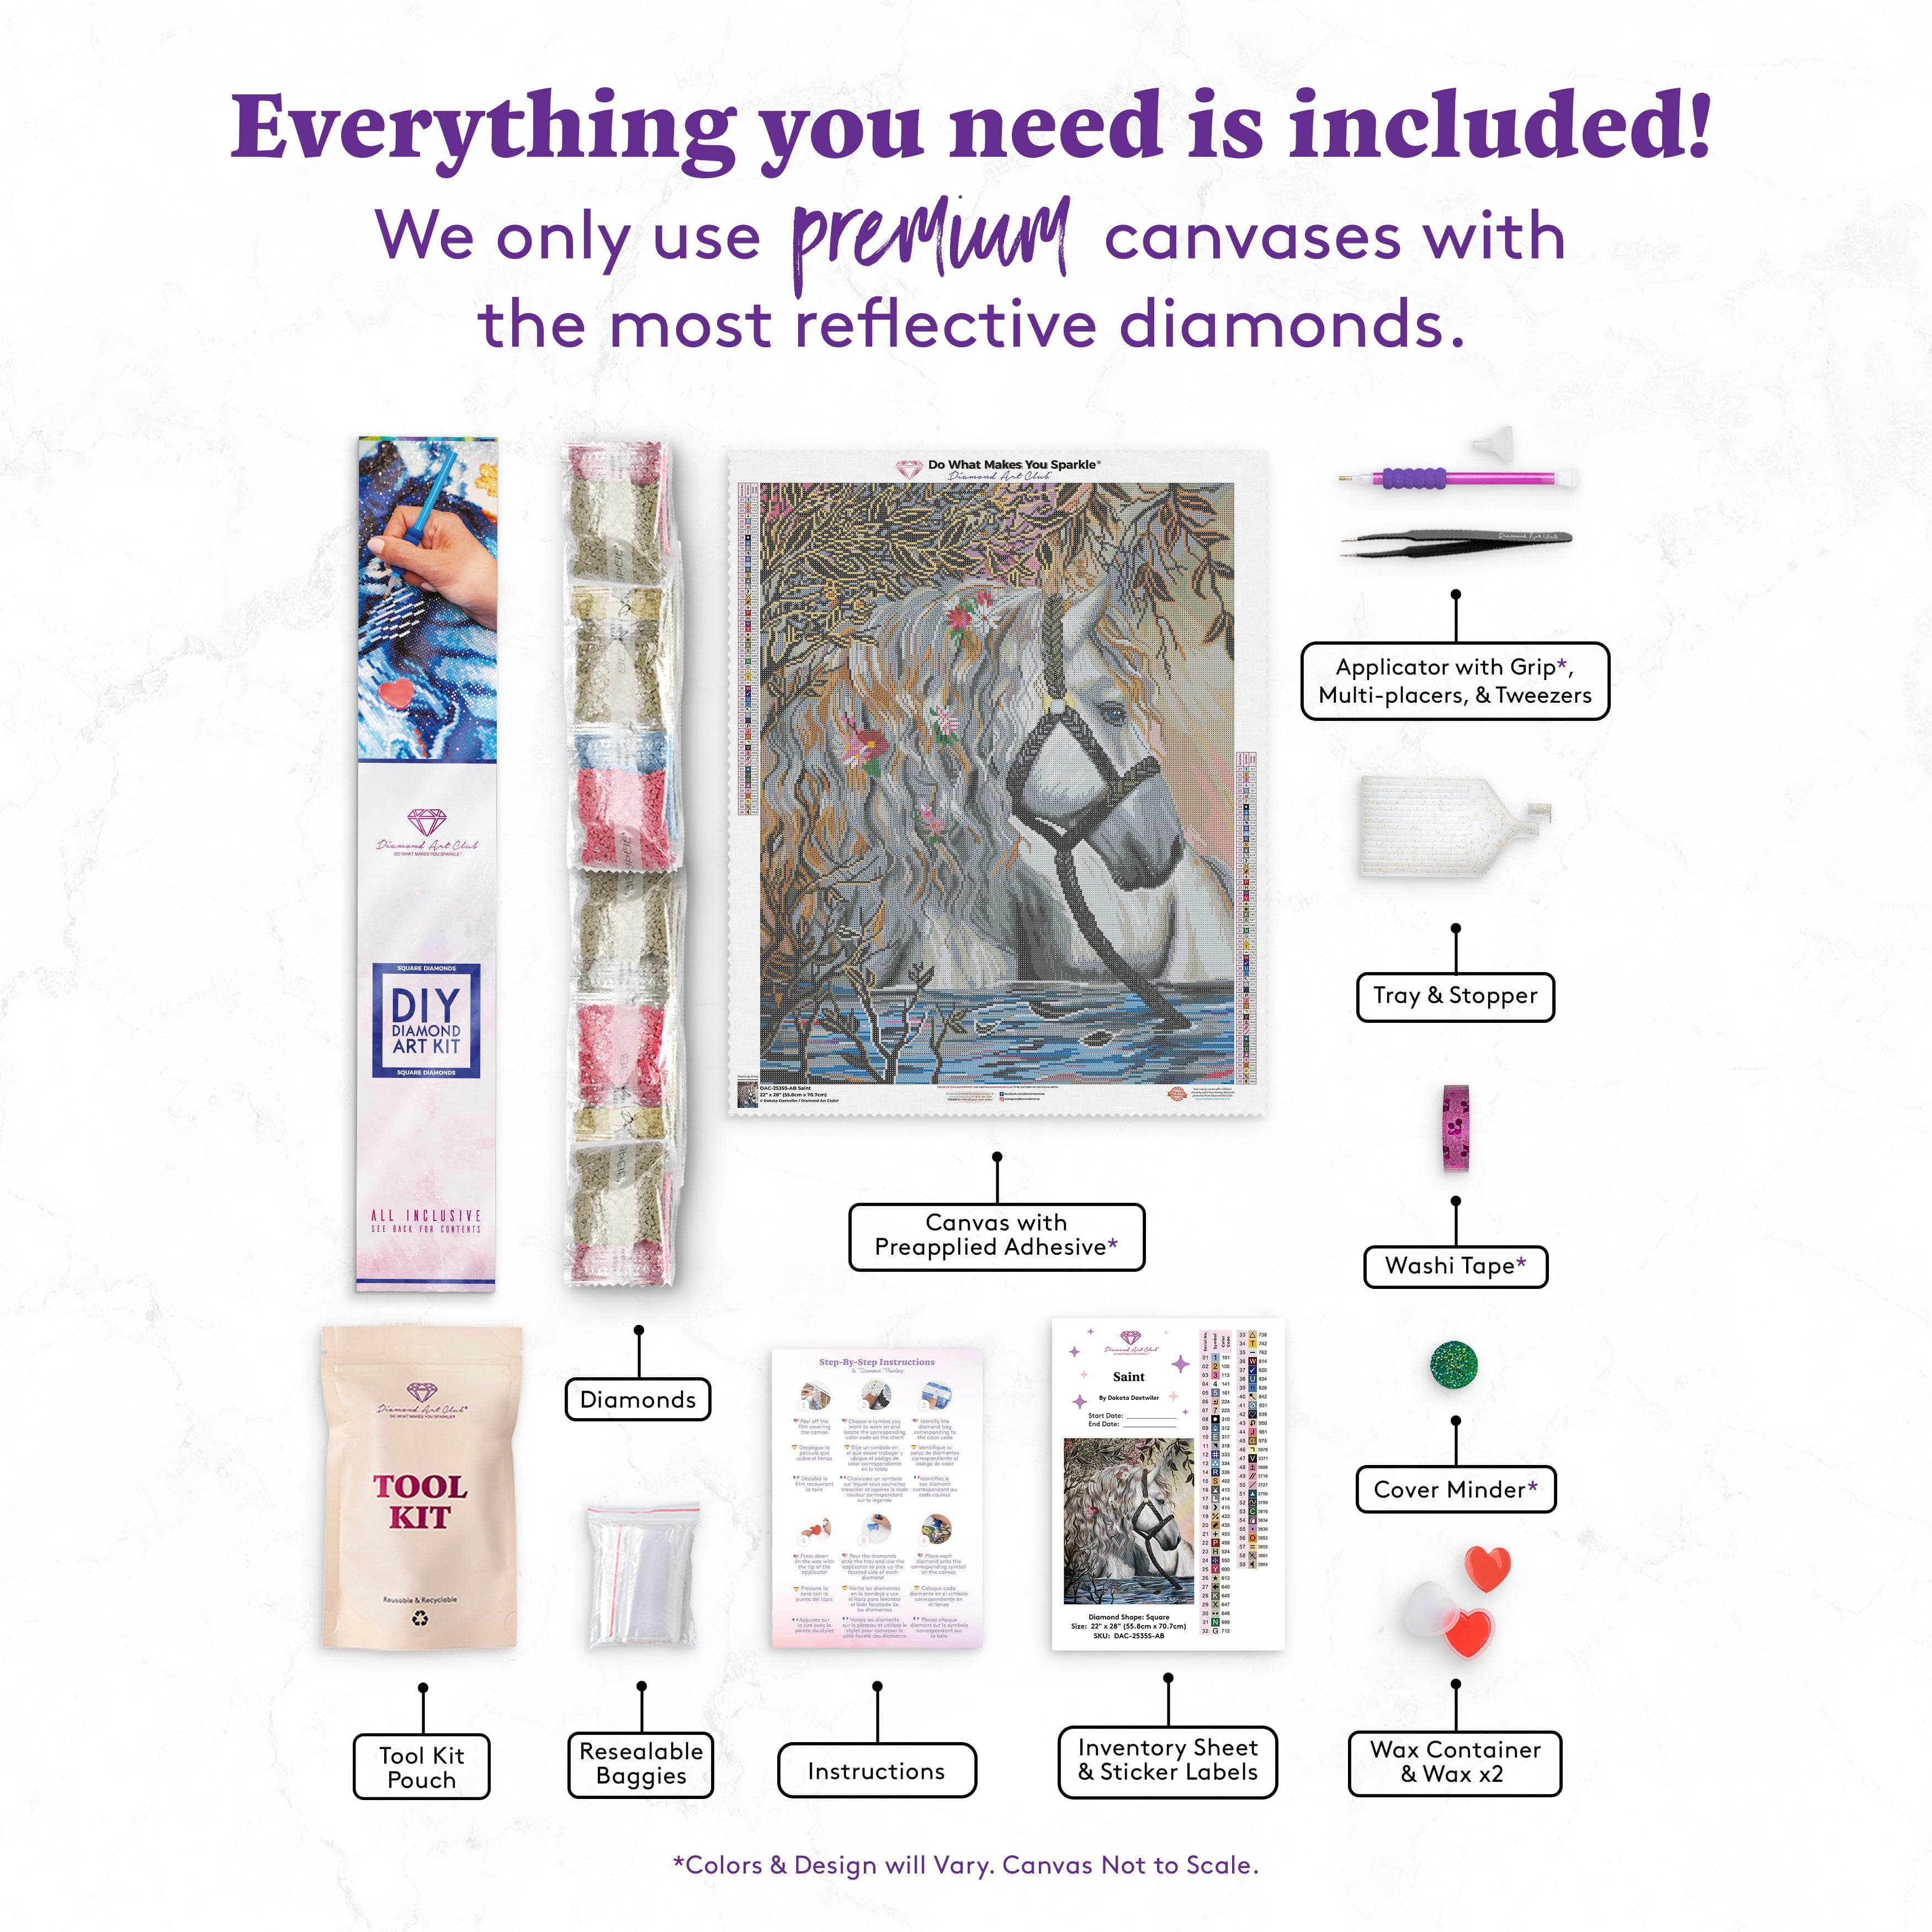 DIY Birthday Cards (3-Pack) – Diamond Art Club